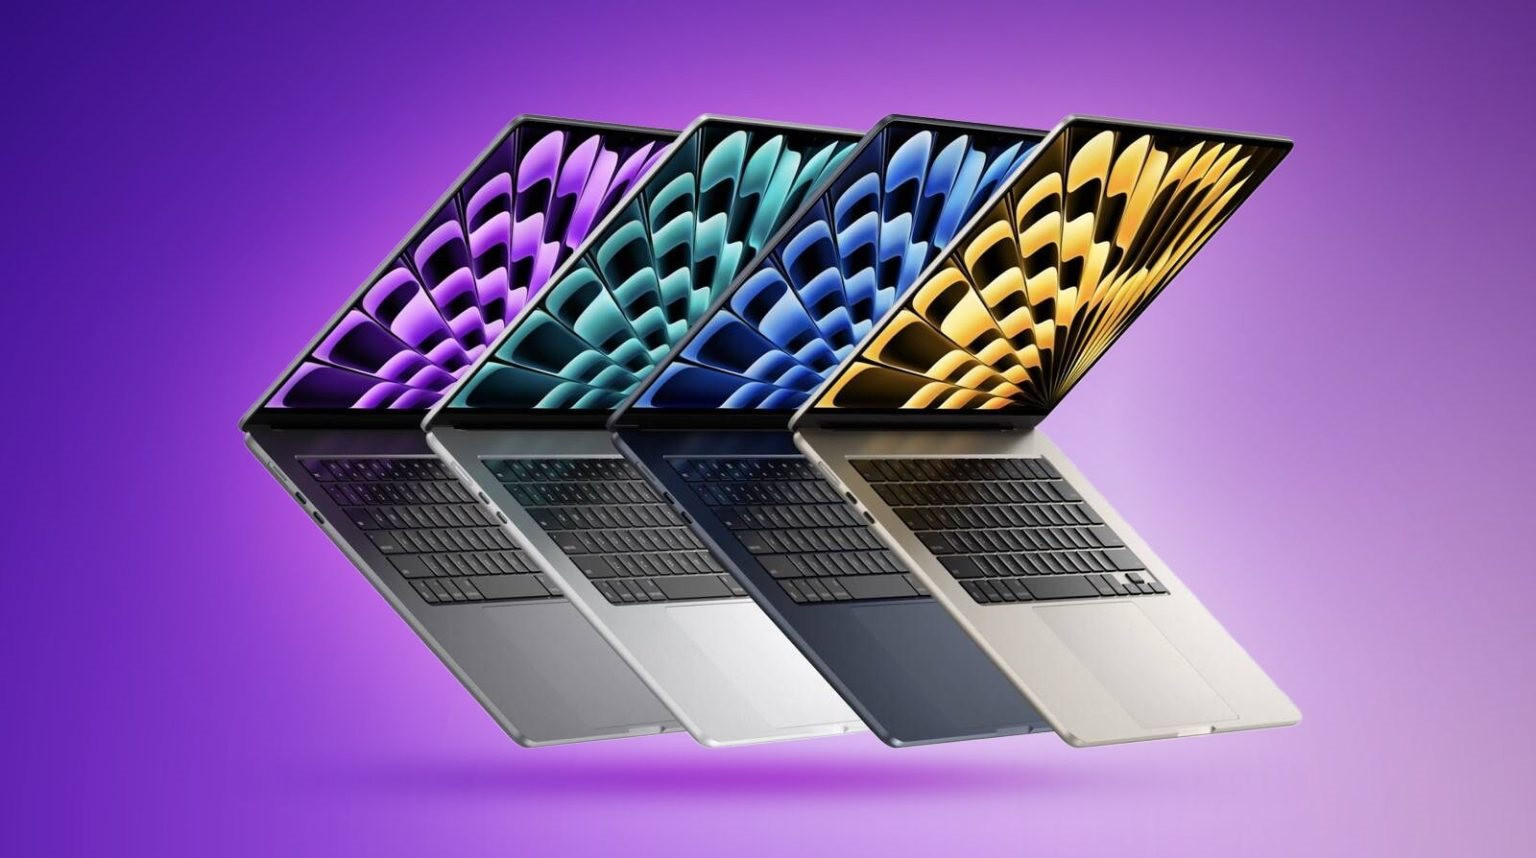 macbook-air-15-inch-feature-purple-1536x858.jpg